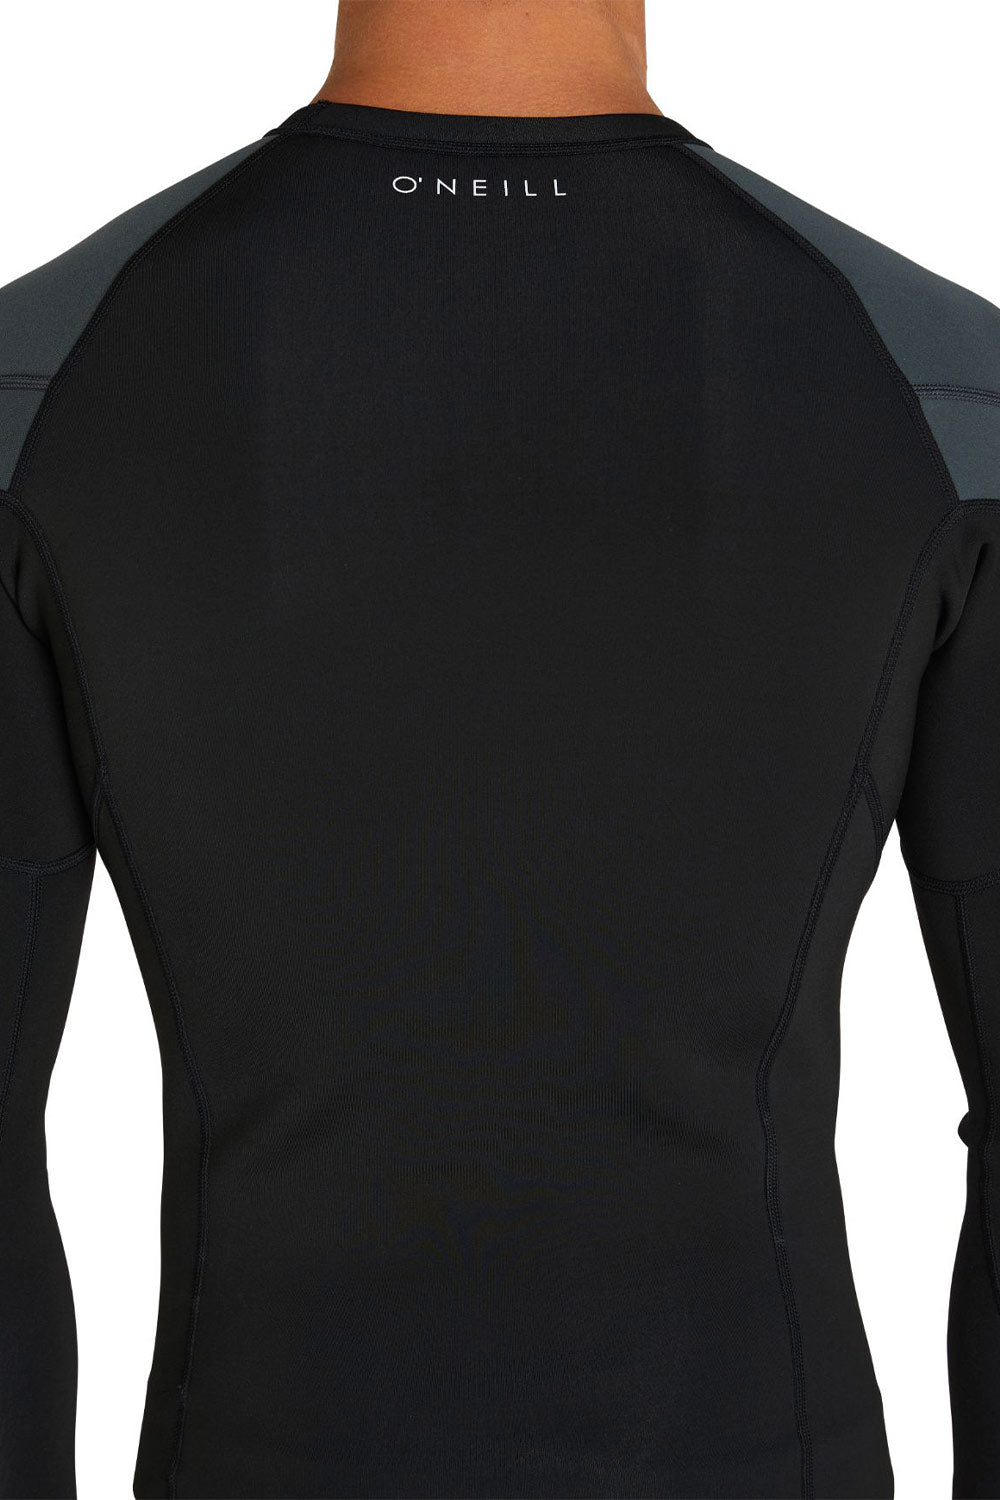 O'Neill Mens Reactor II 1.5mm Long Sleeve Wetsuit Jacket